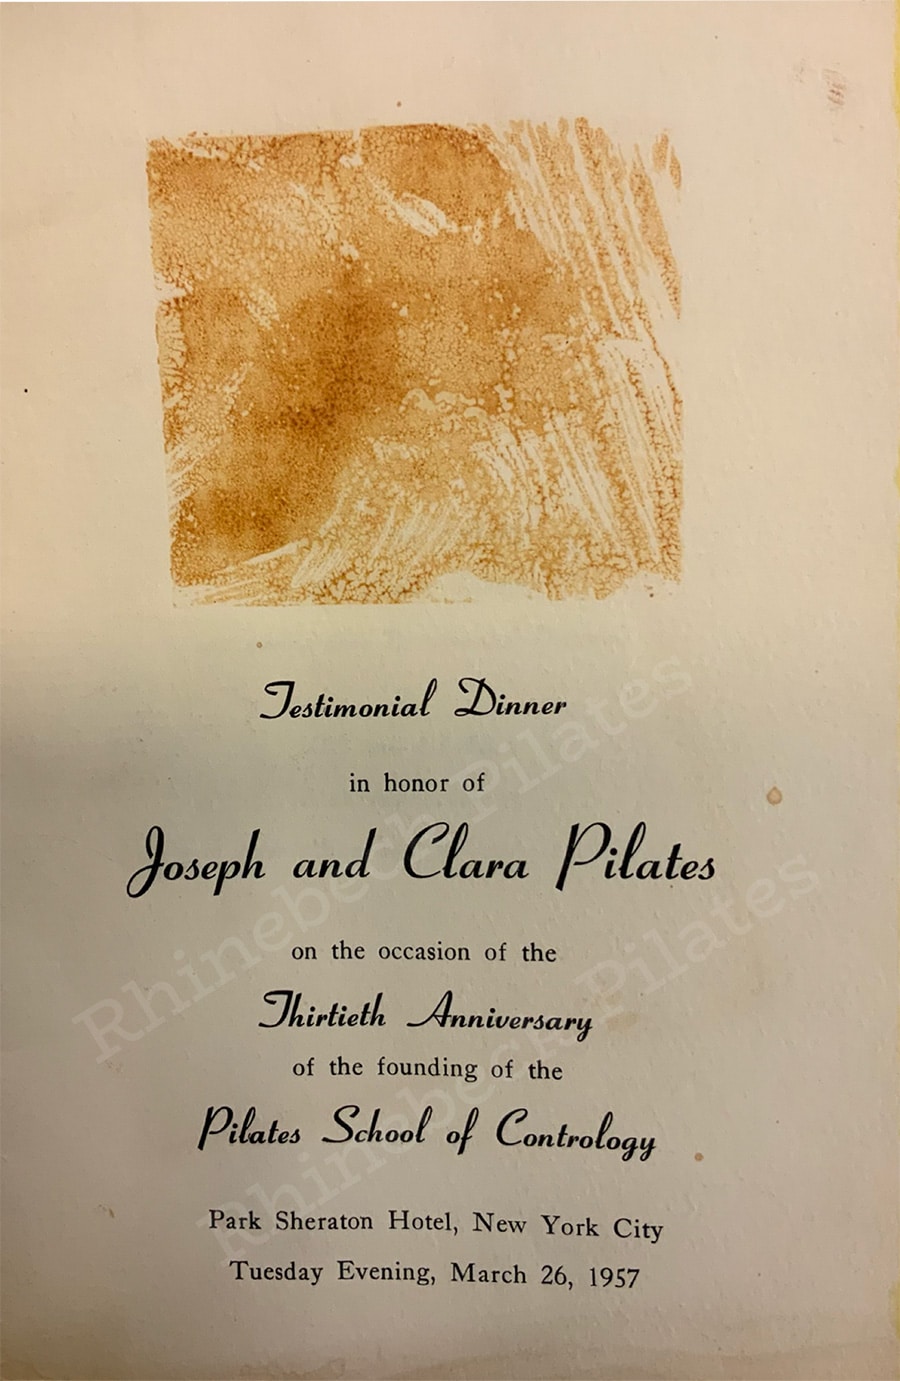 Joseph and Clara Pilates Testimonial Dinner Program